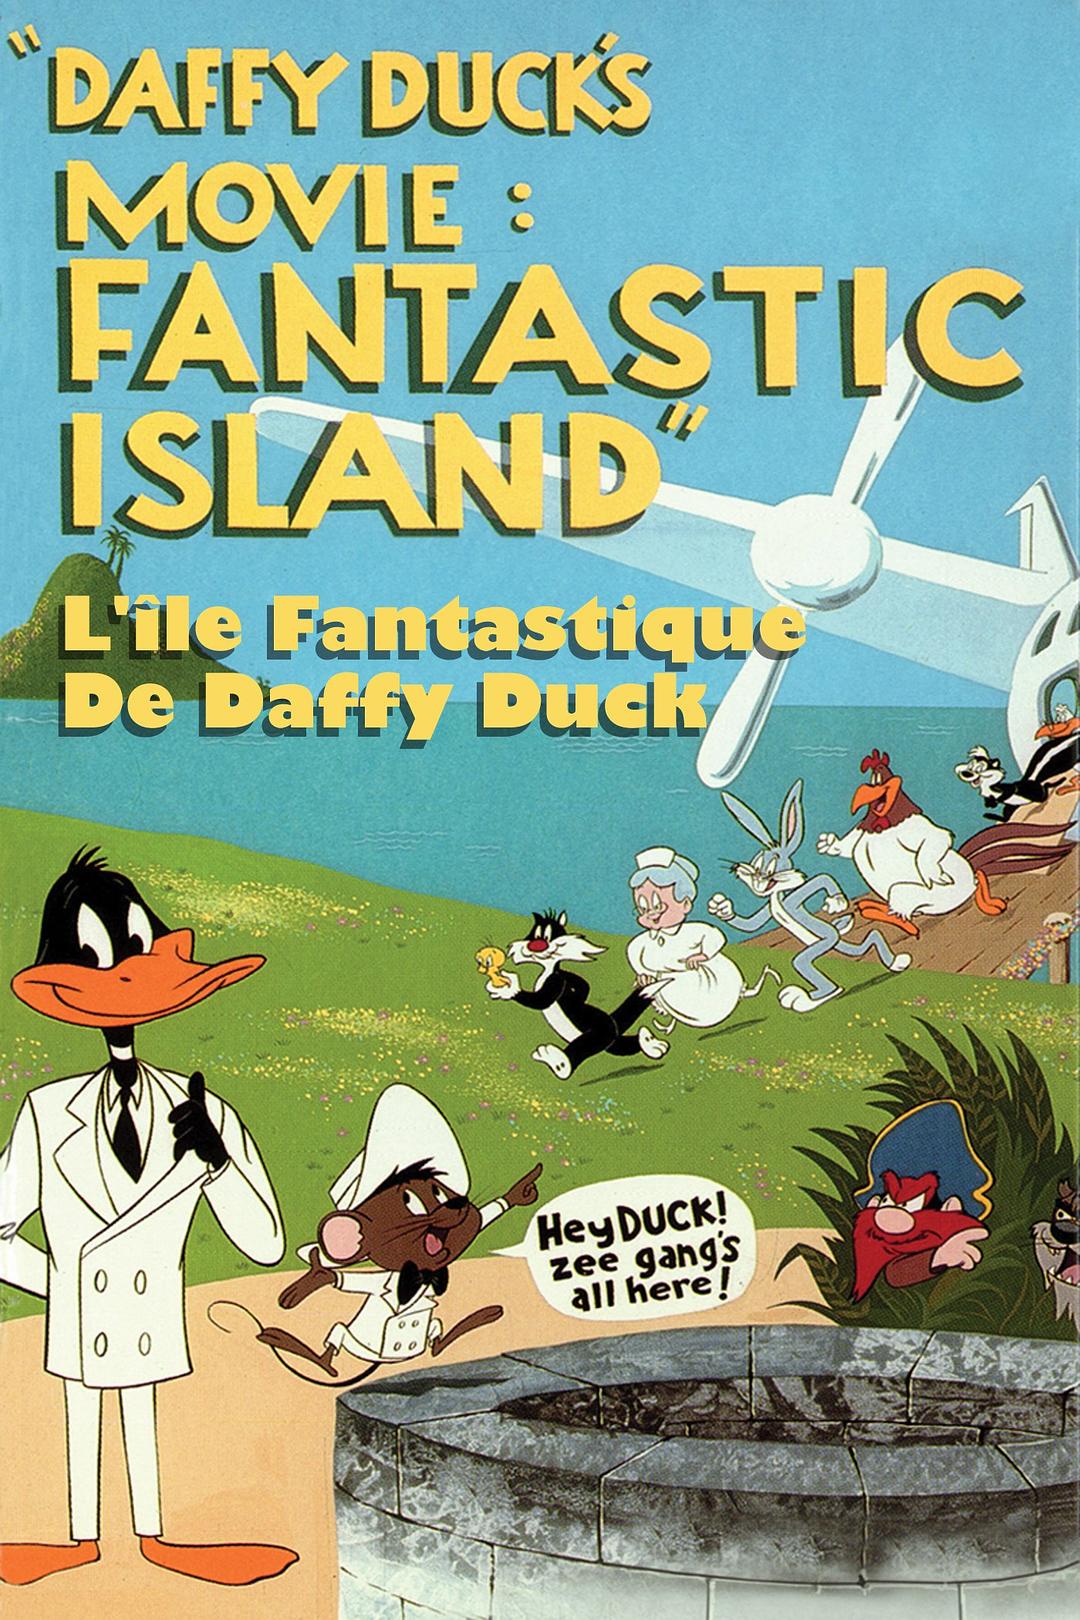 达菲鸭大电影:奇异岛 Daffy.Ducks.Movie.Fantastic.Island.1983.1080p.AMZN.WEBRip.DDP2.0.x264-SiGMA 7.33GB-1.png